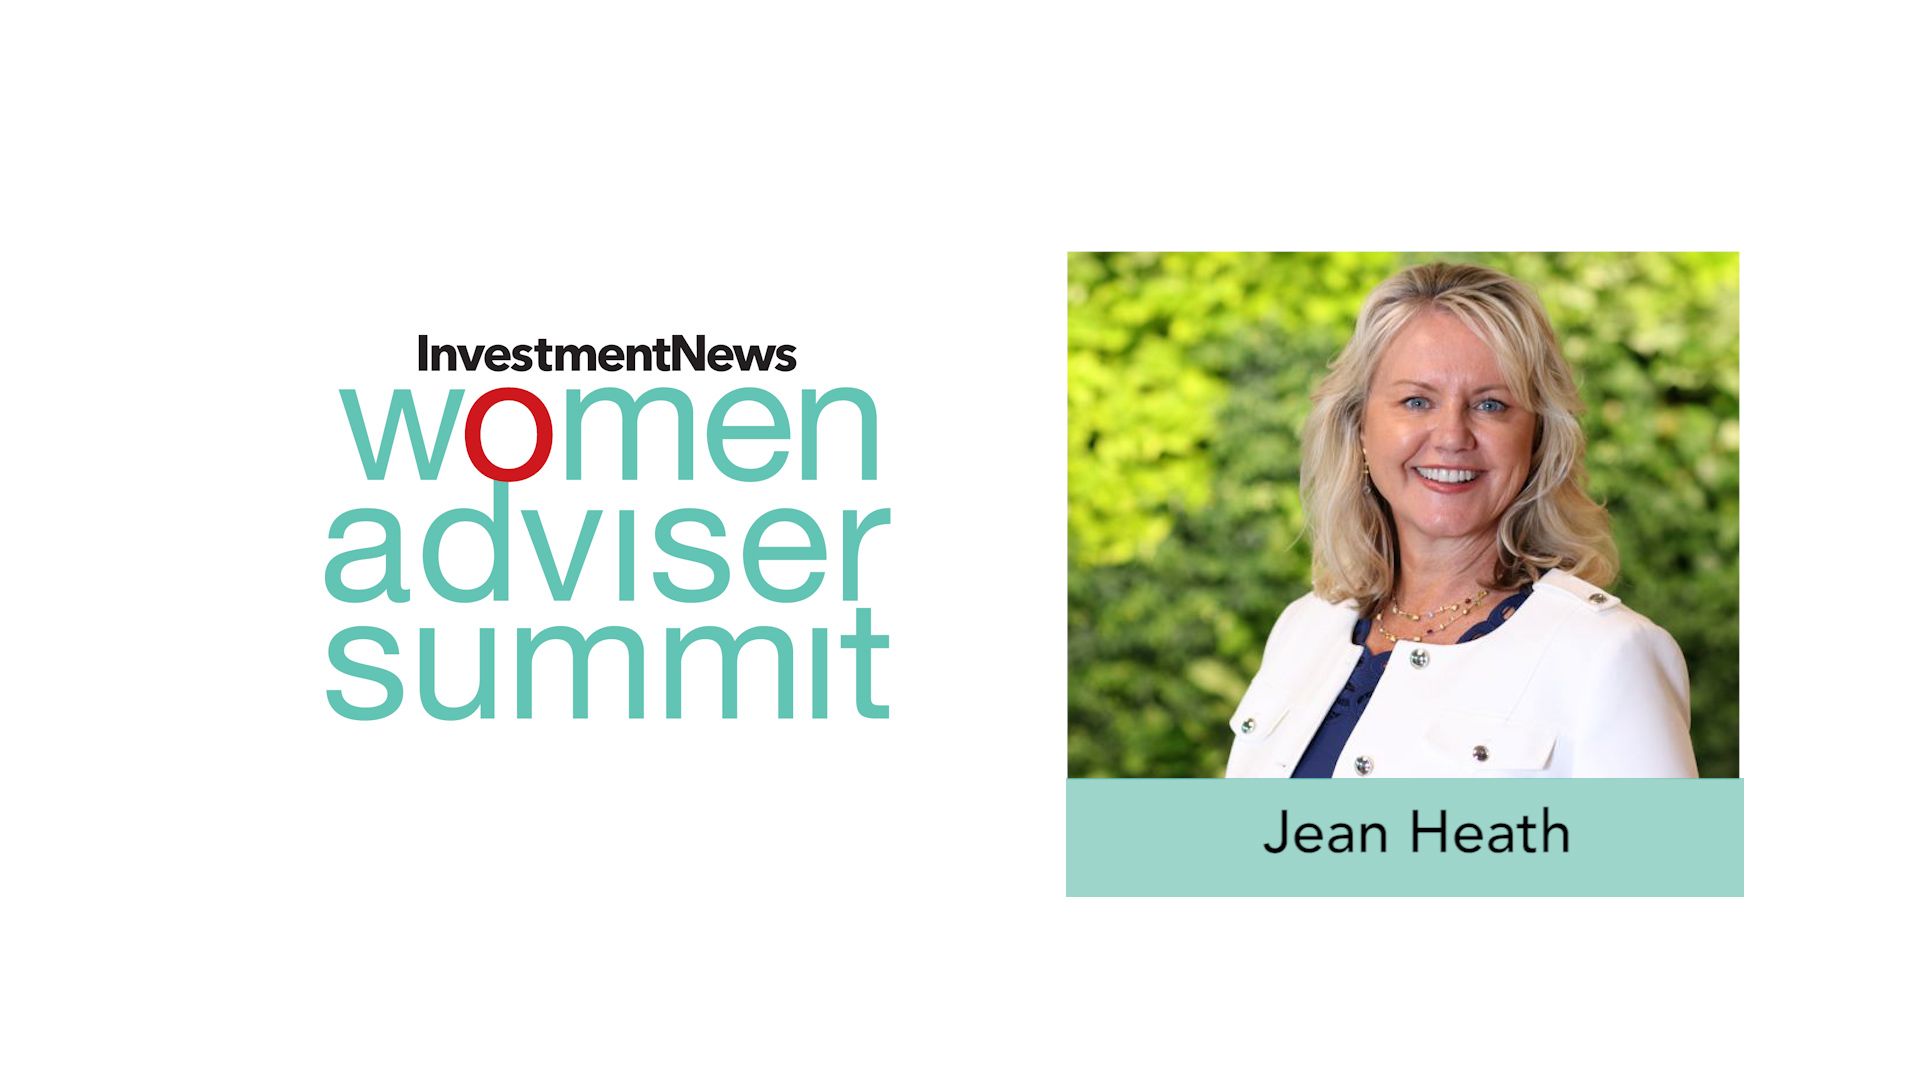 Tips on mentoring programs from Envestnet’s Jean Heath